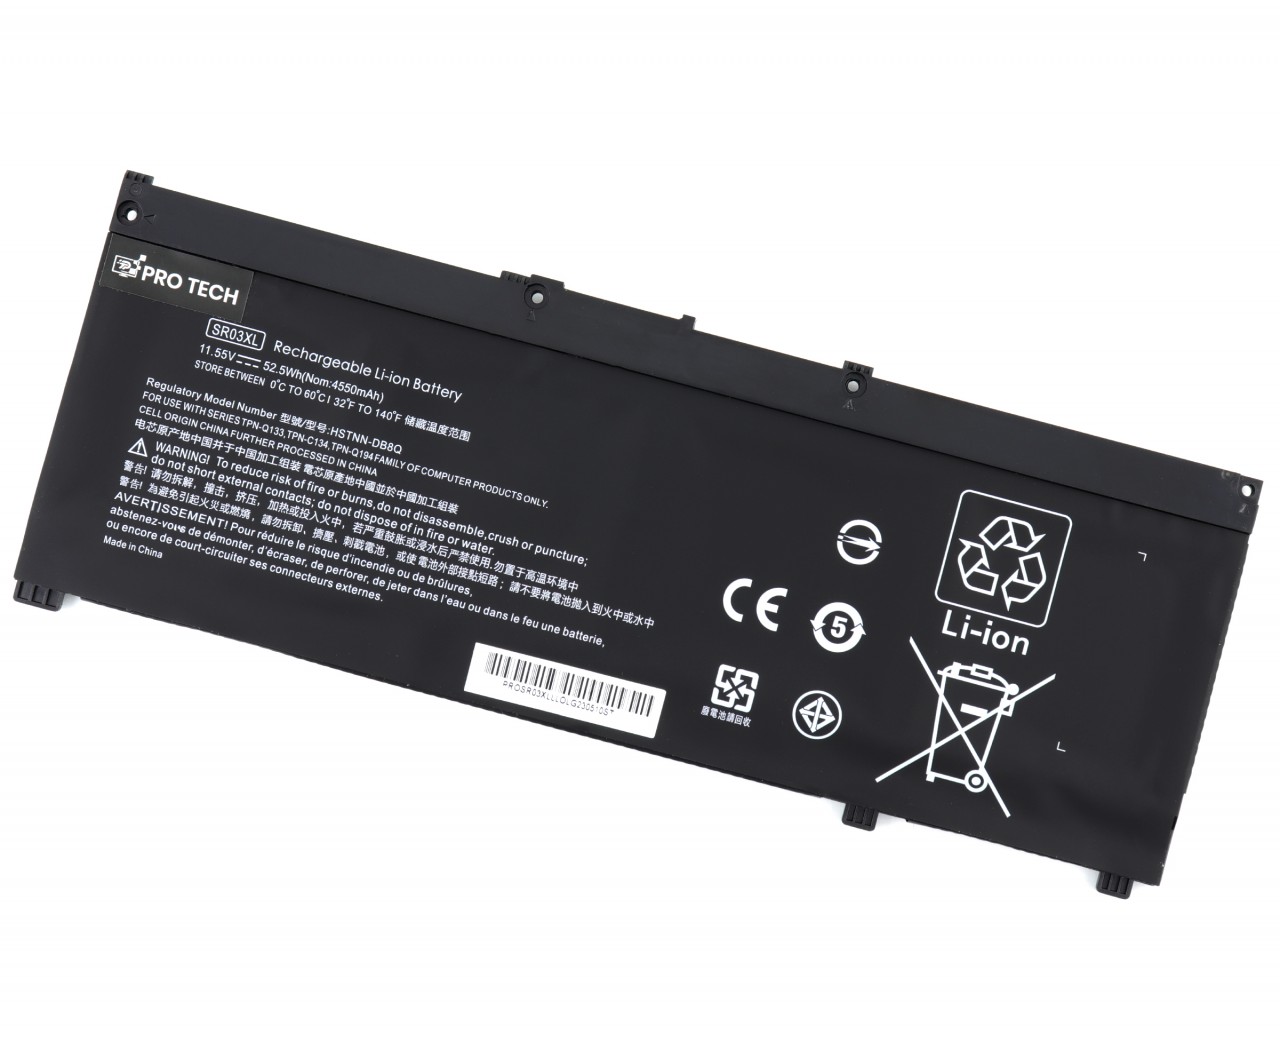 Baterie HP 917678-2B1 52.5Wh